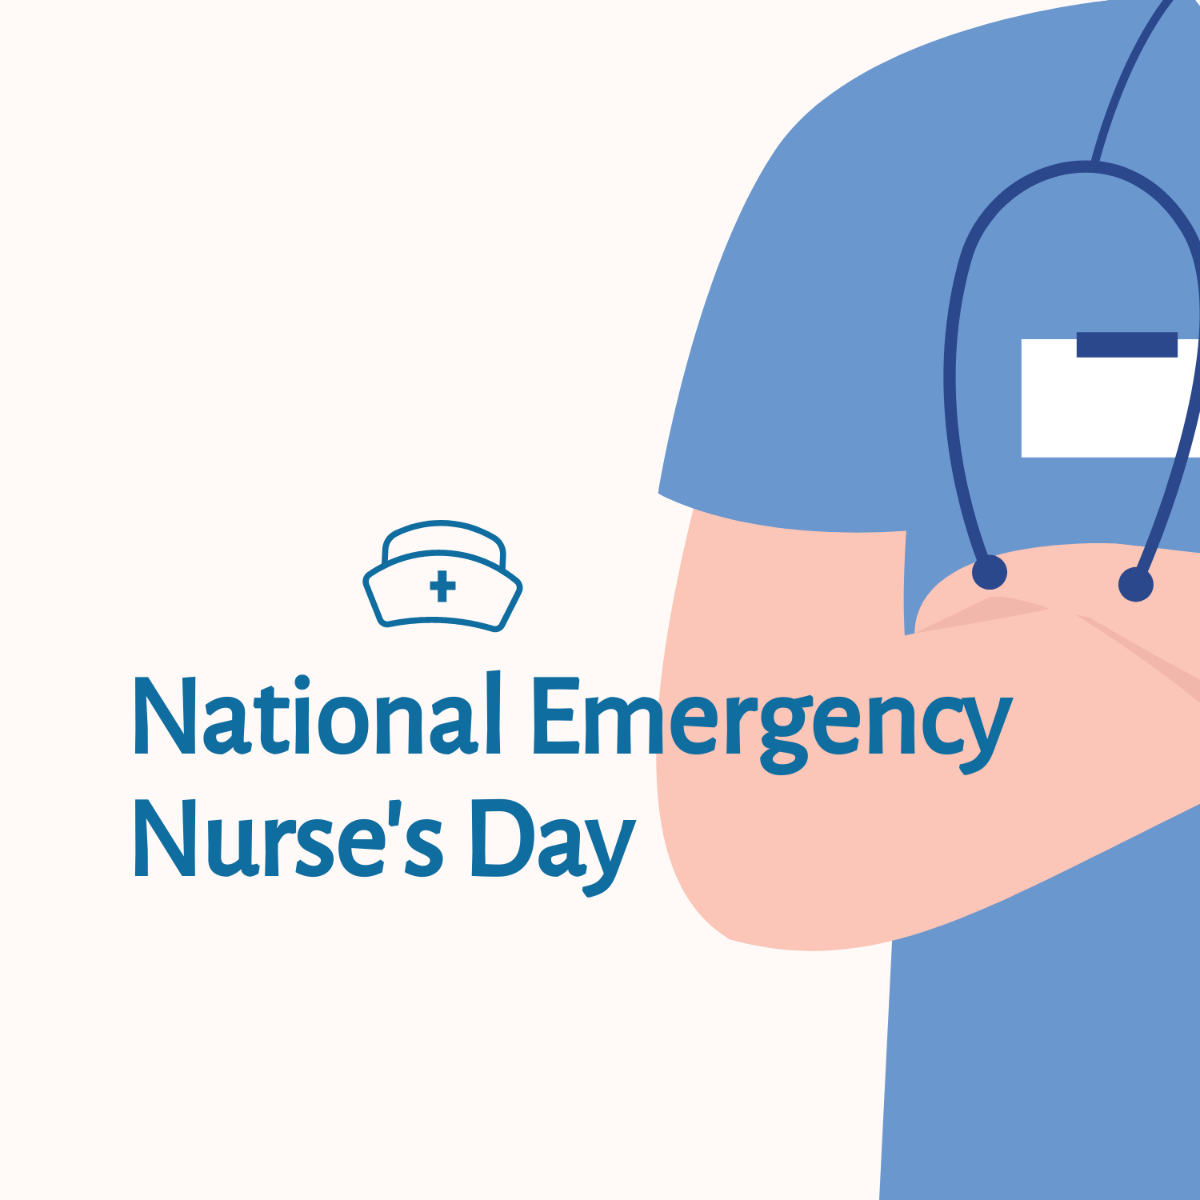 National Emergency Nurse's Day Illustration Template